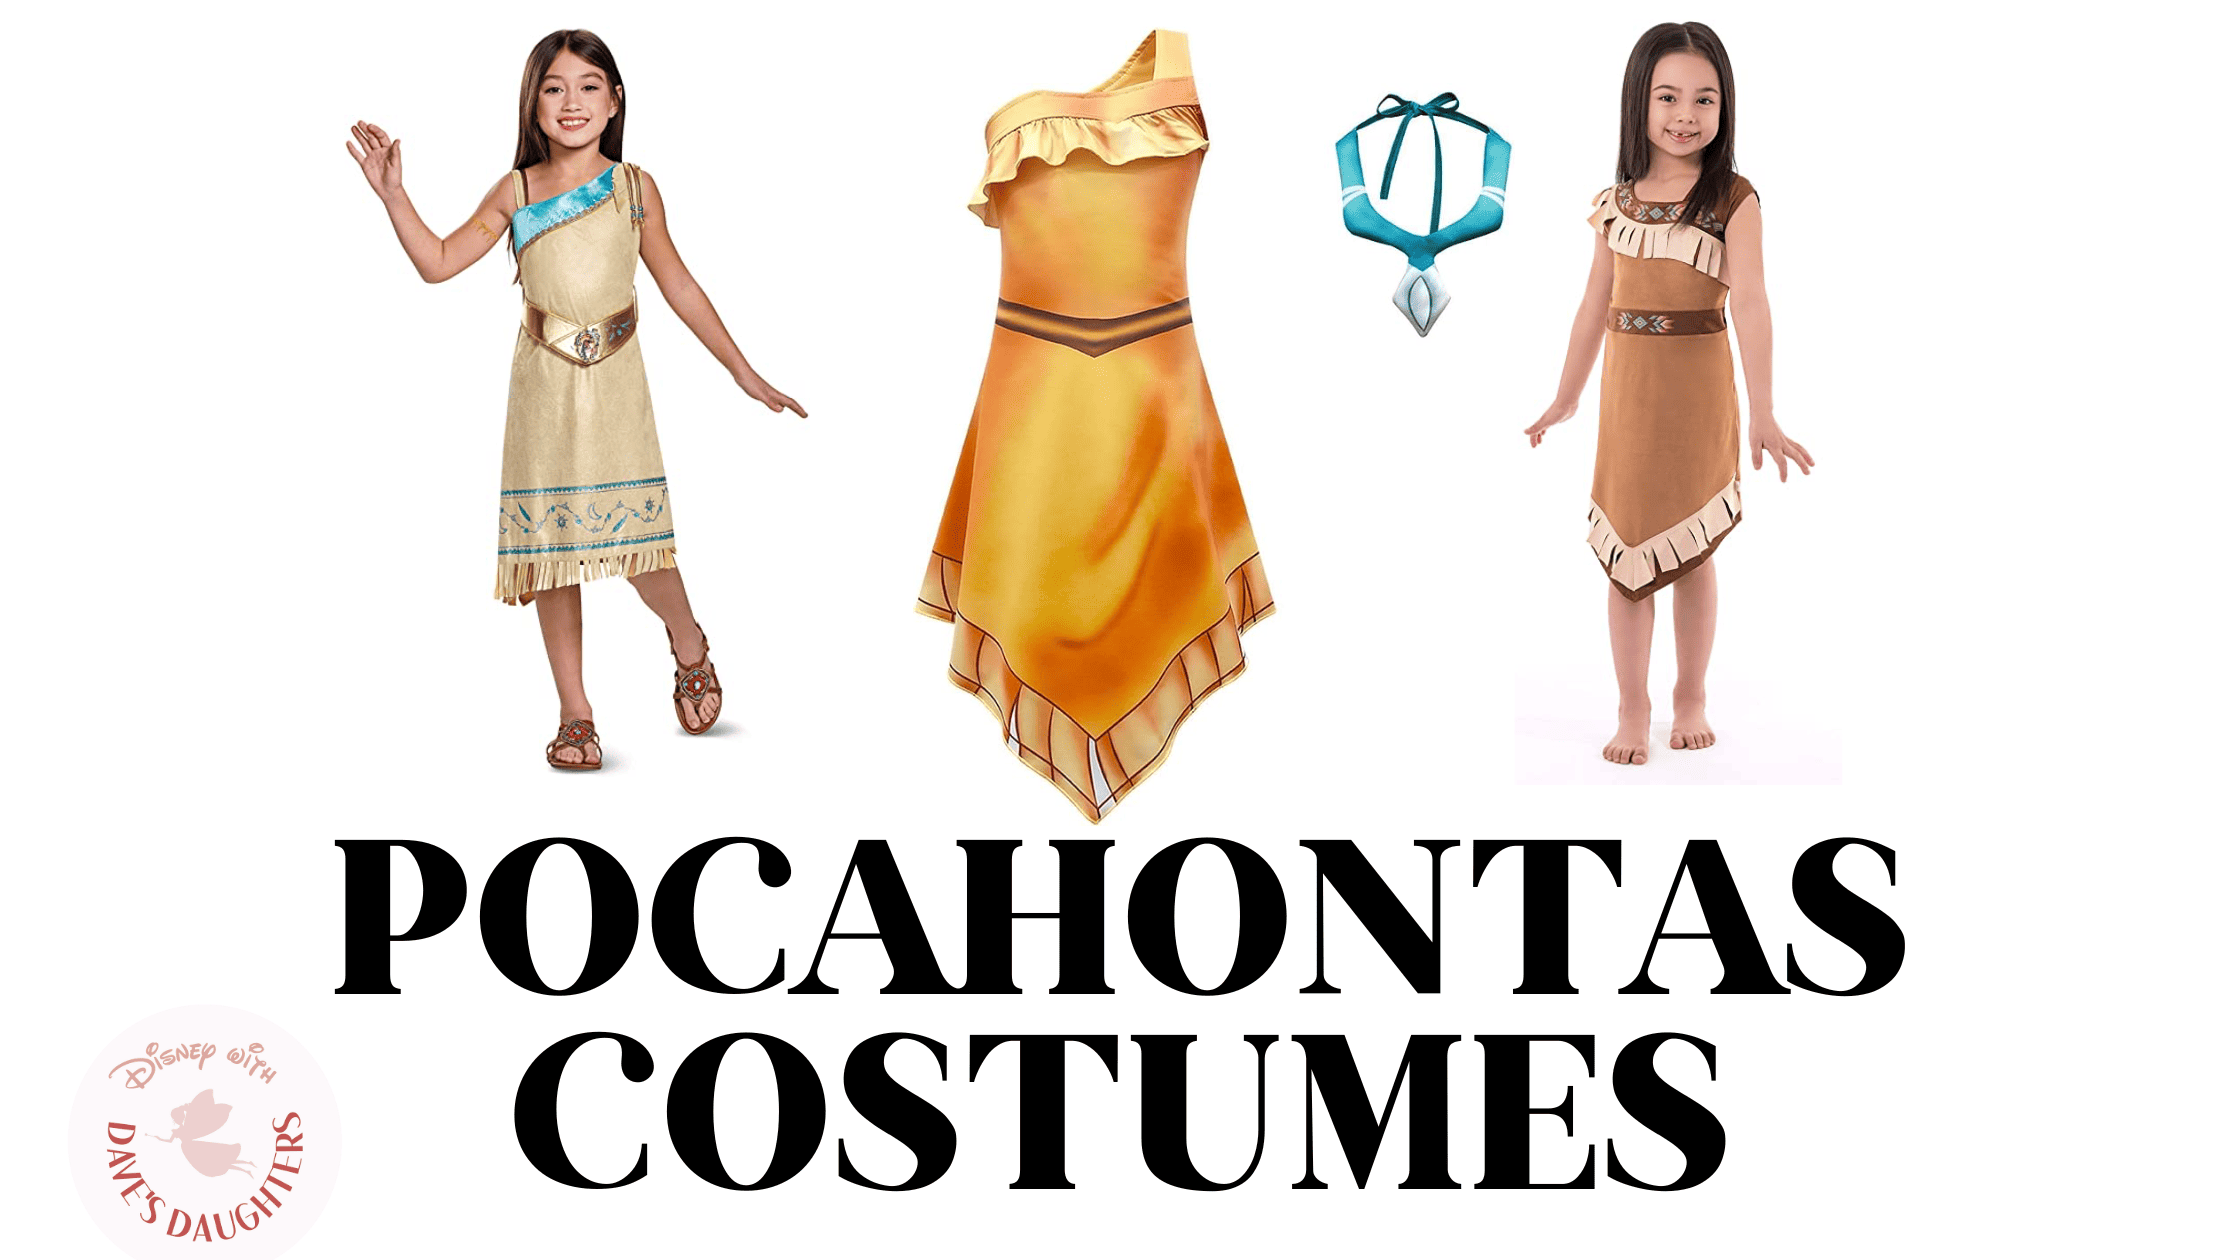 Pocahontas Costumes